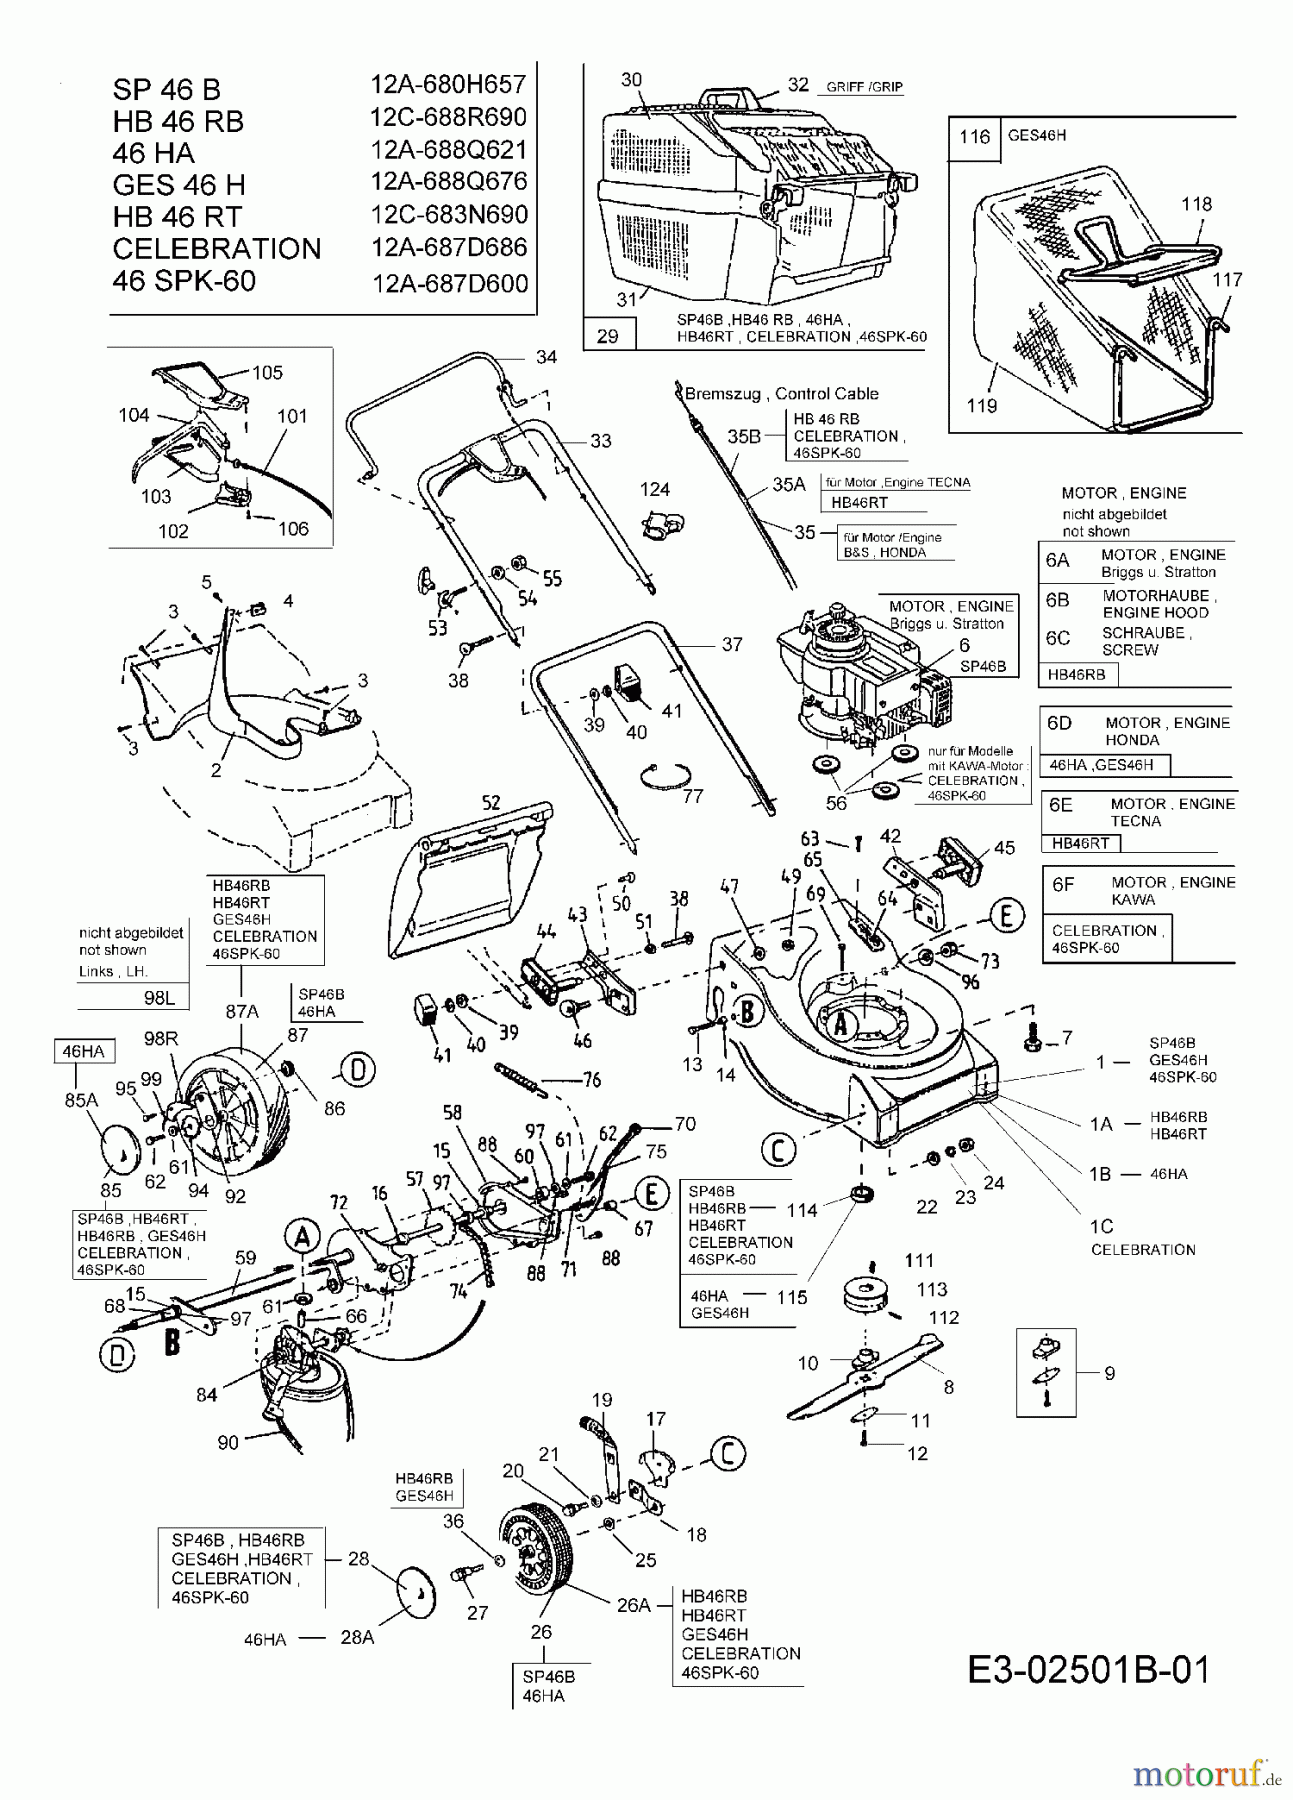  MTD Motormäher mit Antrieb 46 SPK-60 12A-687D600  (2007) Grundgerät